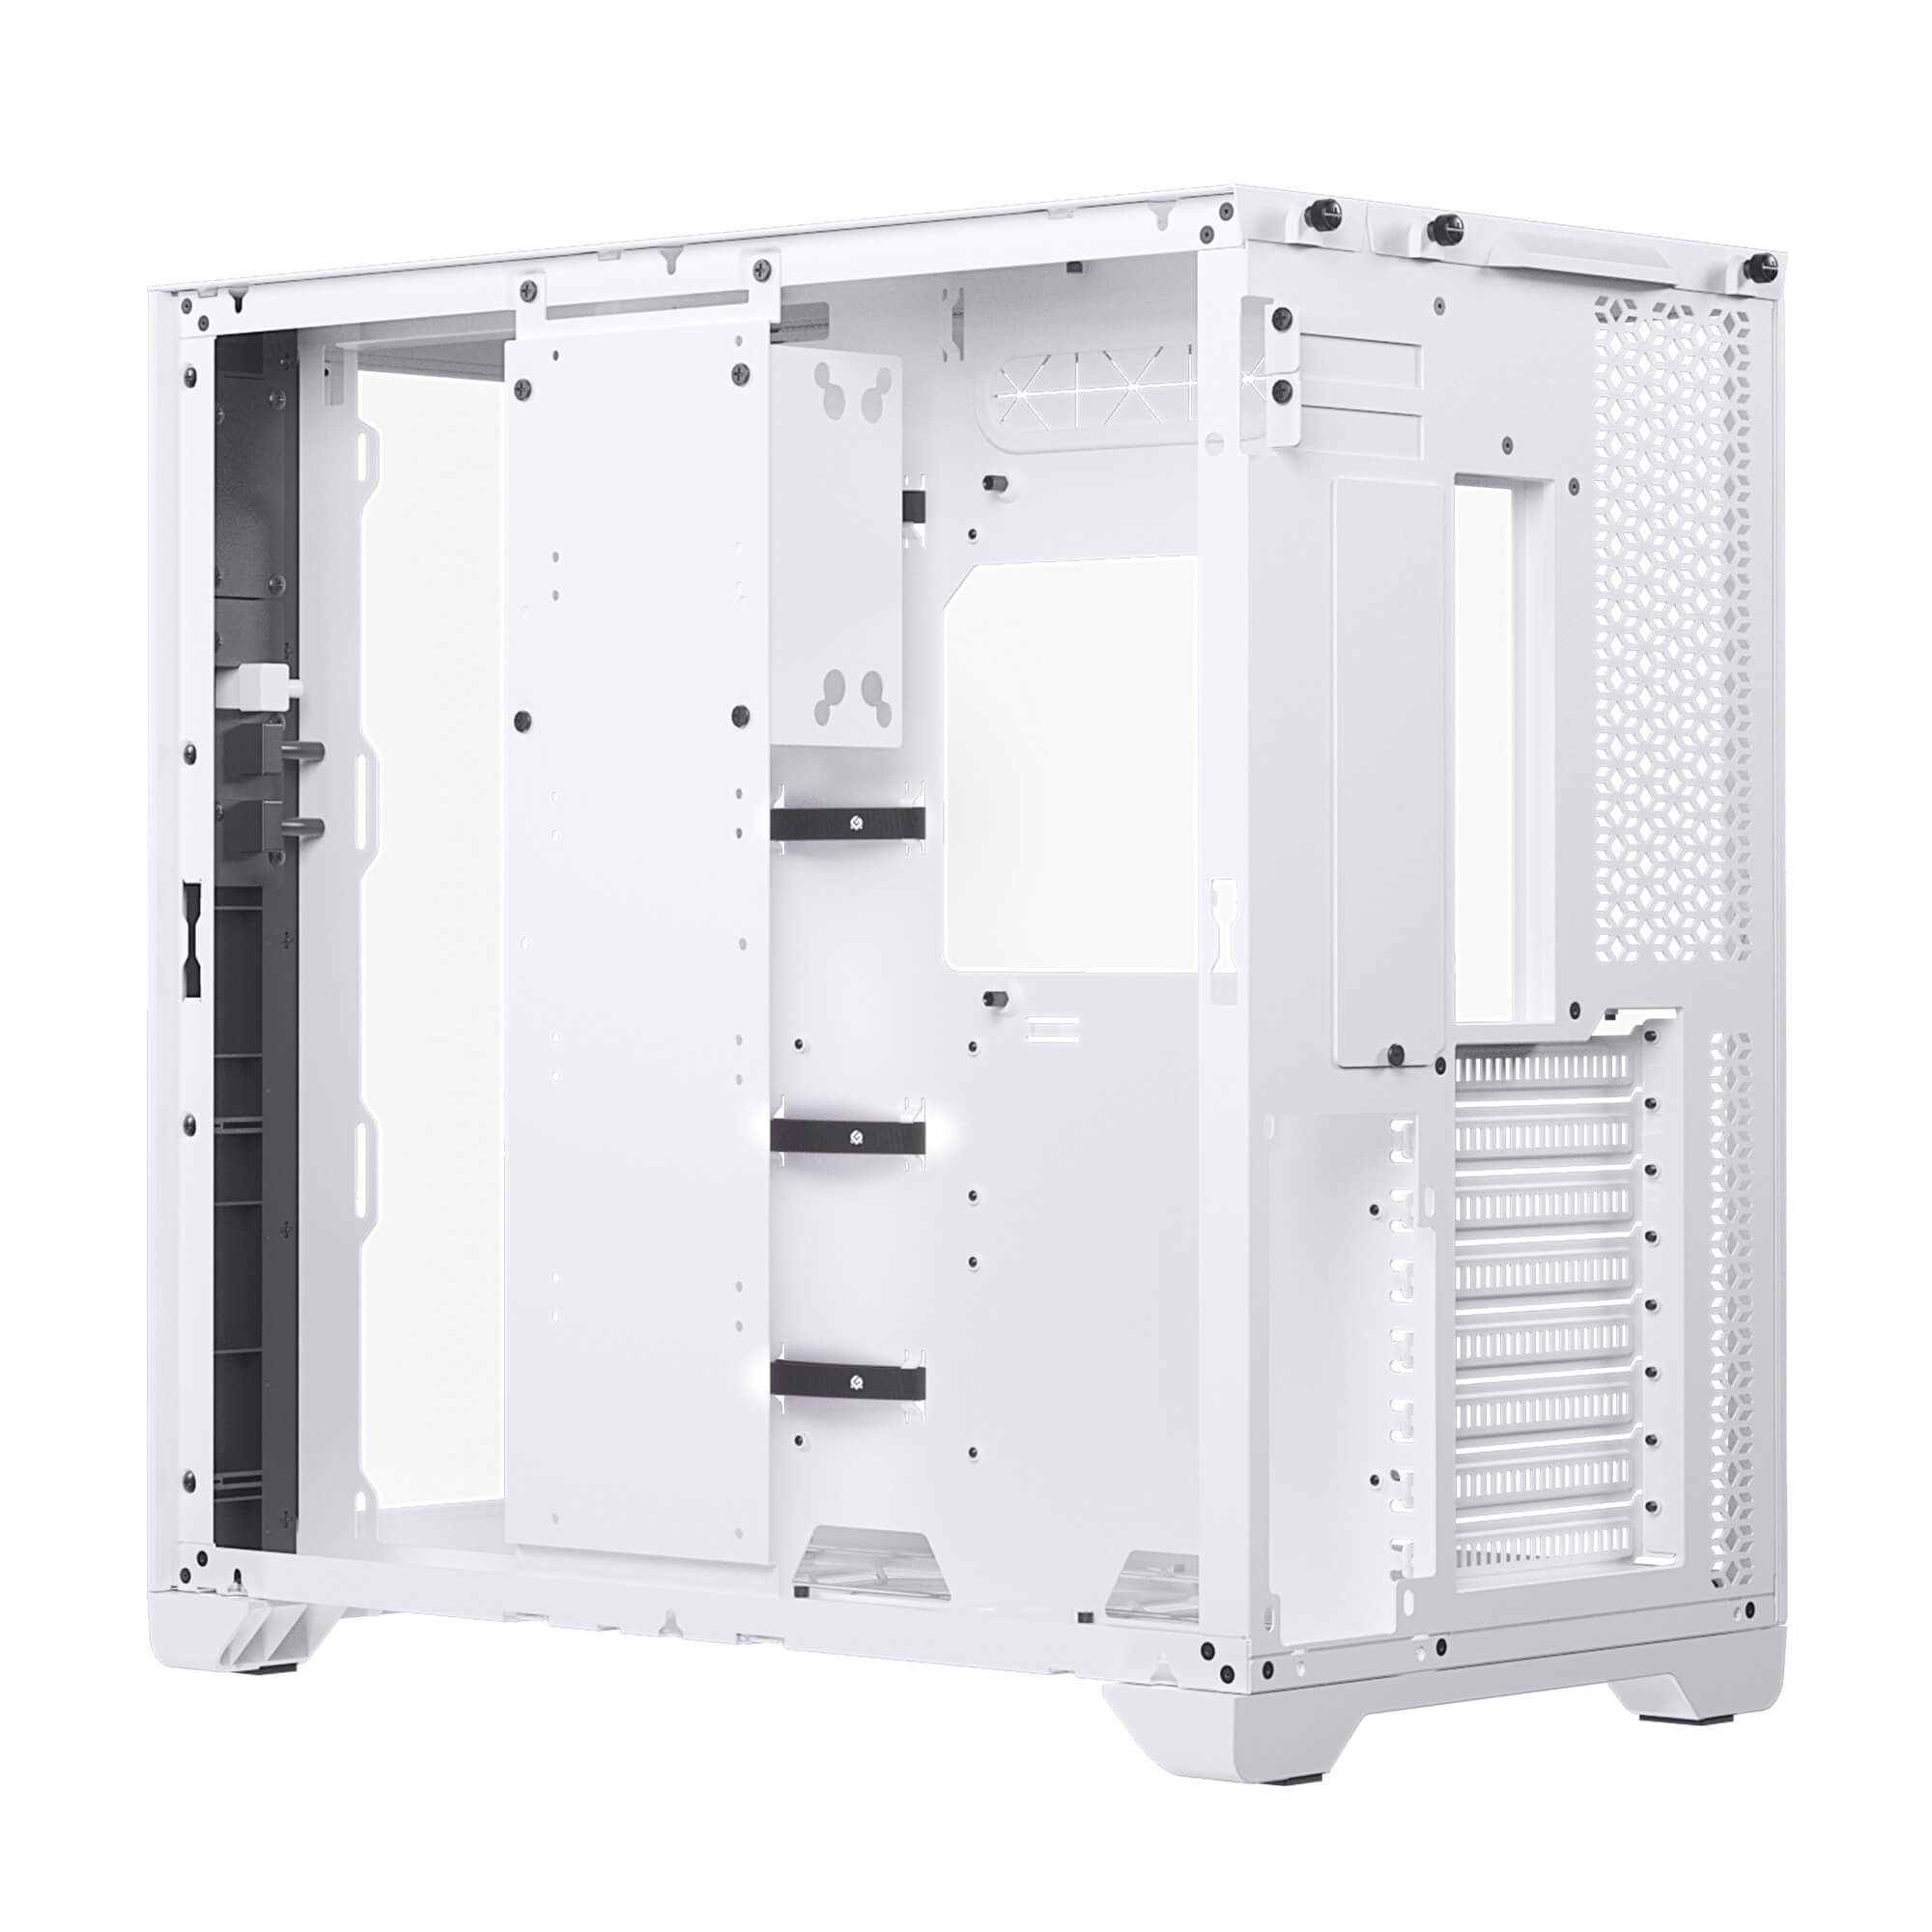 Корпус MagniumGear NEO Qube 2, White, Dual System, ARGB Strip, боковая и передняя панель Tempered Glass, Mid-Tower / MG-NE620Q_DWT02_RU